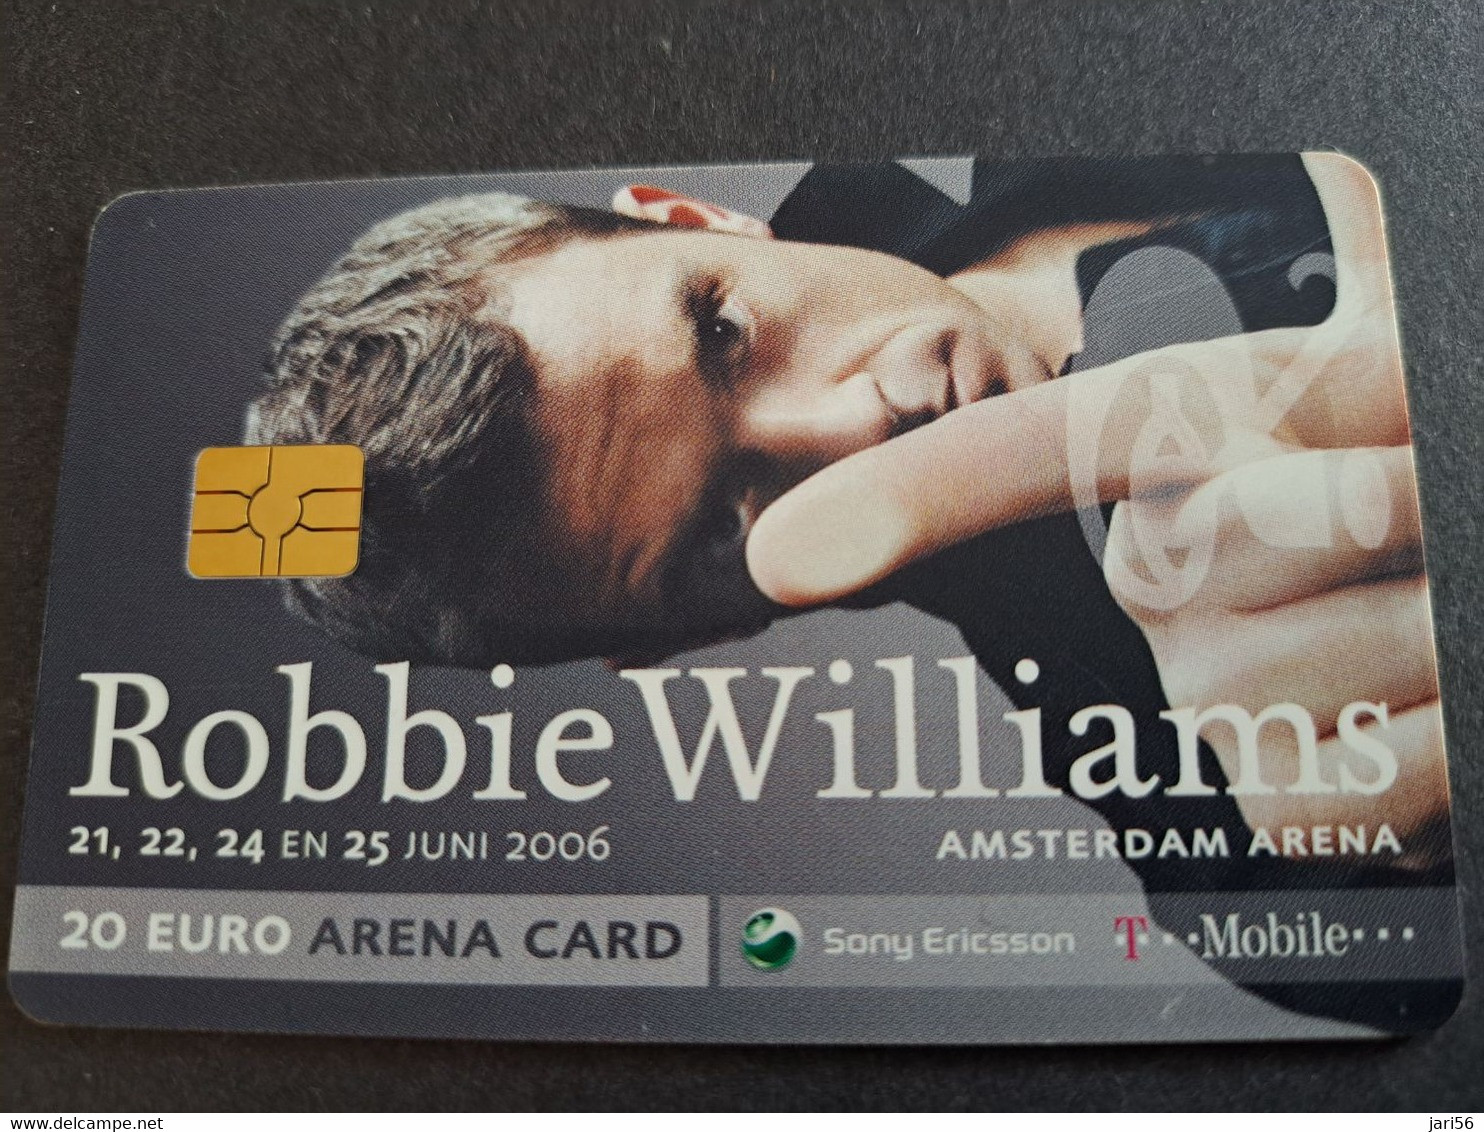 NETHERLANDS CHIPCARD € 20,-  ,- ARENA CARD / ROBBIE WILLIAMS   /MUSIC   - USED CARD  ** 10368** - Públicas